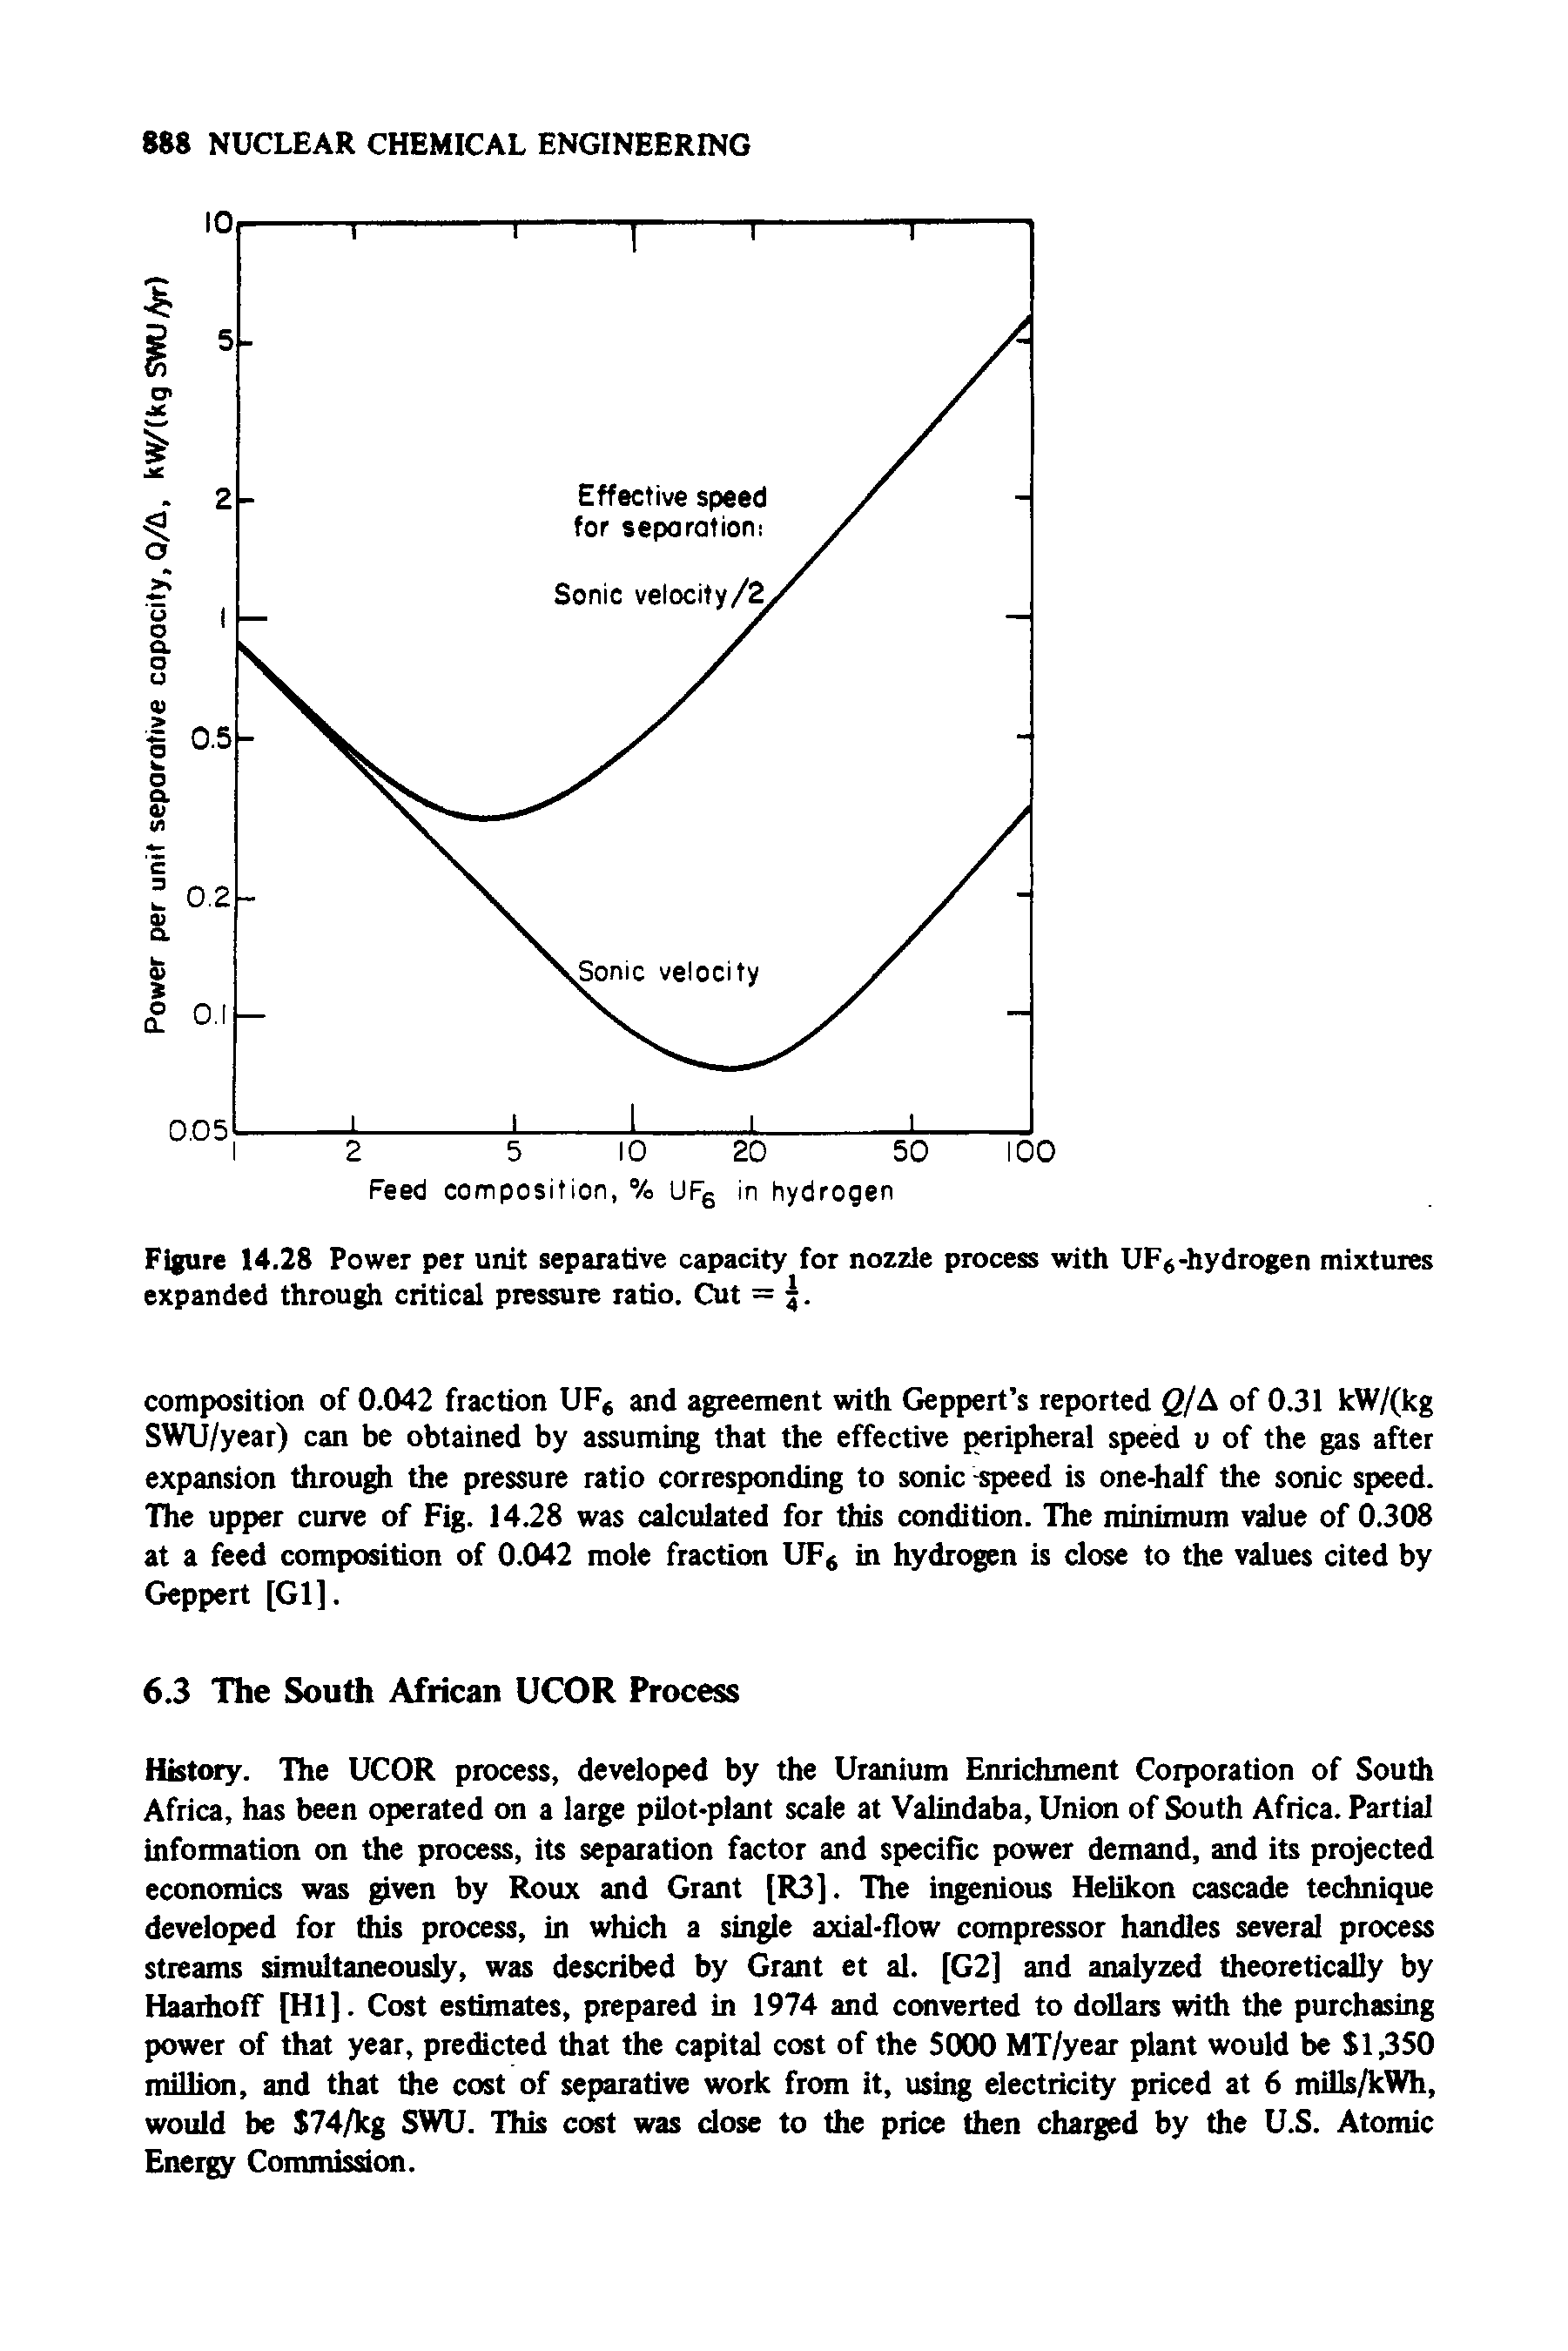 Figure 14.28 Power per unit separative capacity for nozzle process with UFj-hydrogen mixtures expanded through critical pressure ratio. Cut = 3.